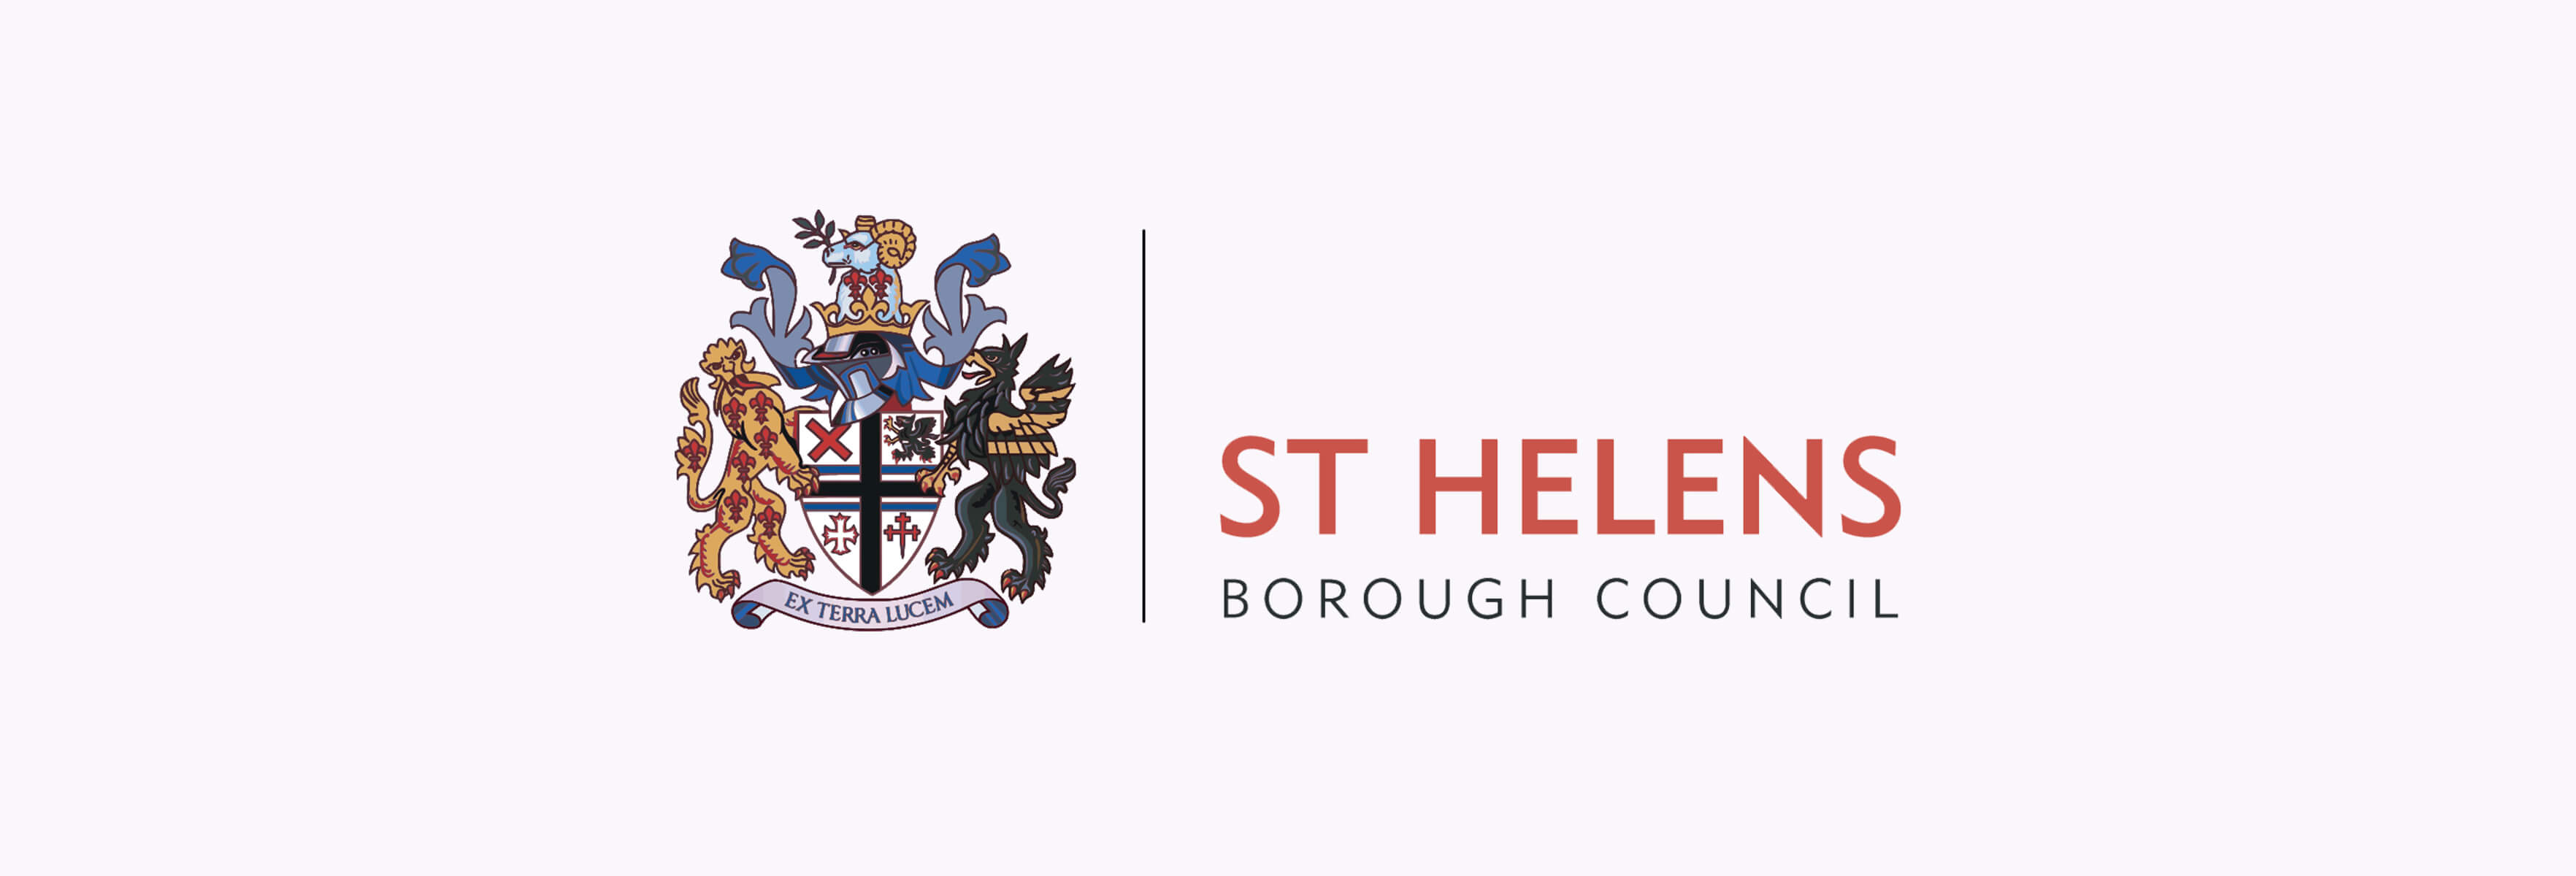 St. Helens Borough Council Logo